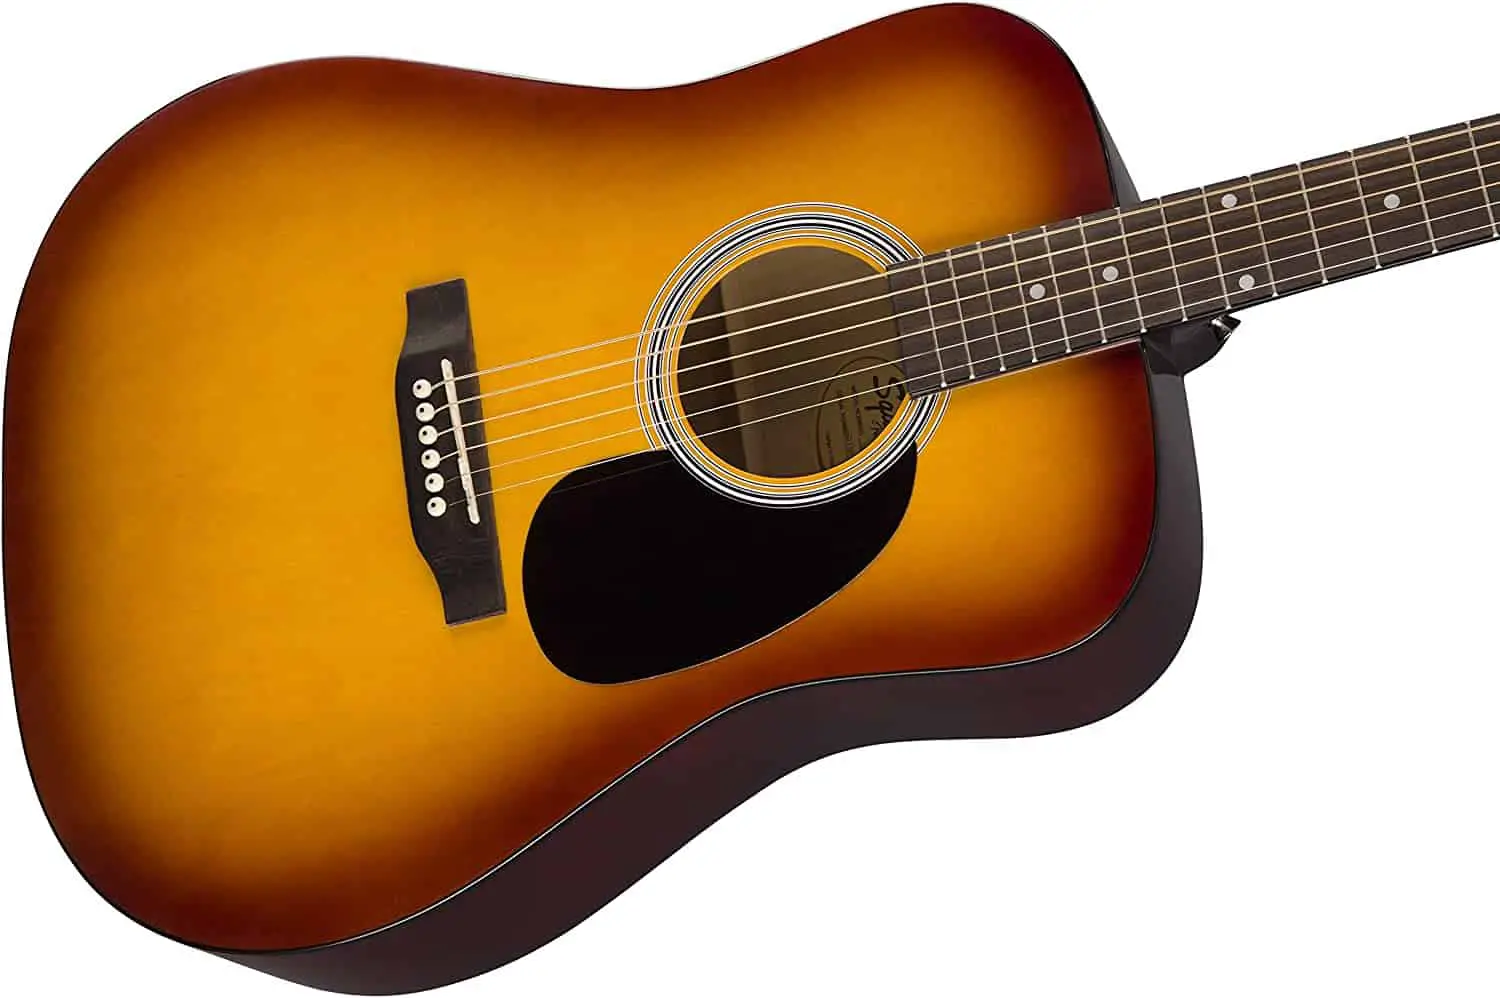 Best acoustic Squier guitar- Squier by Fender SA-150 Dreadnought Acoustic Guitar